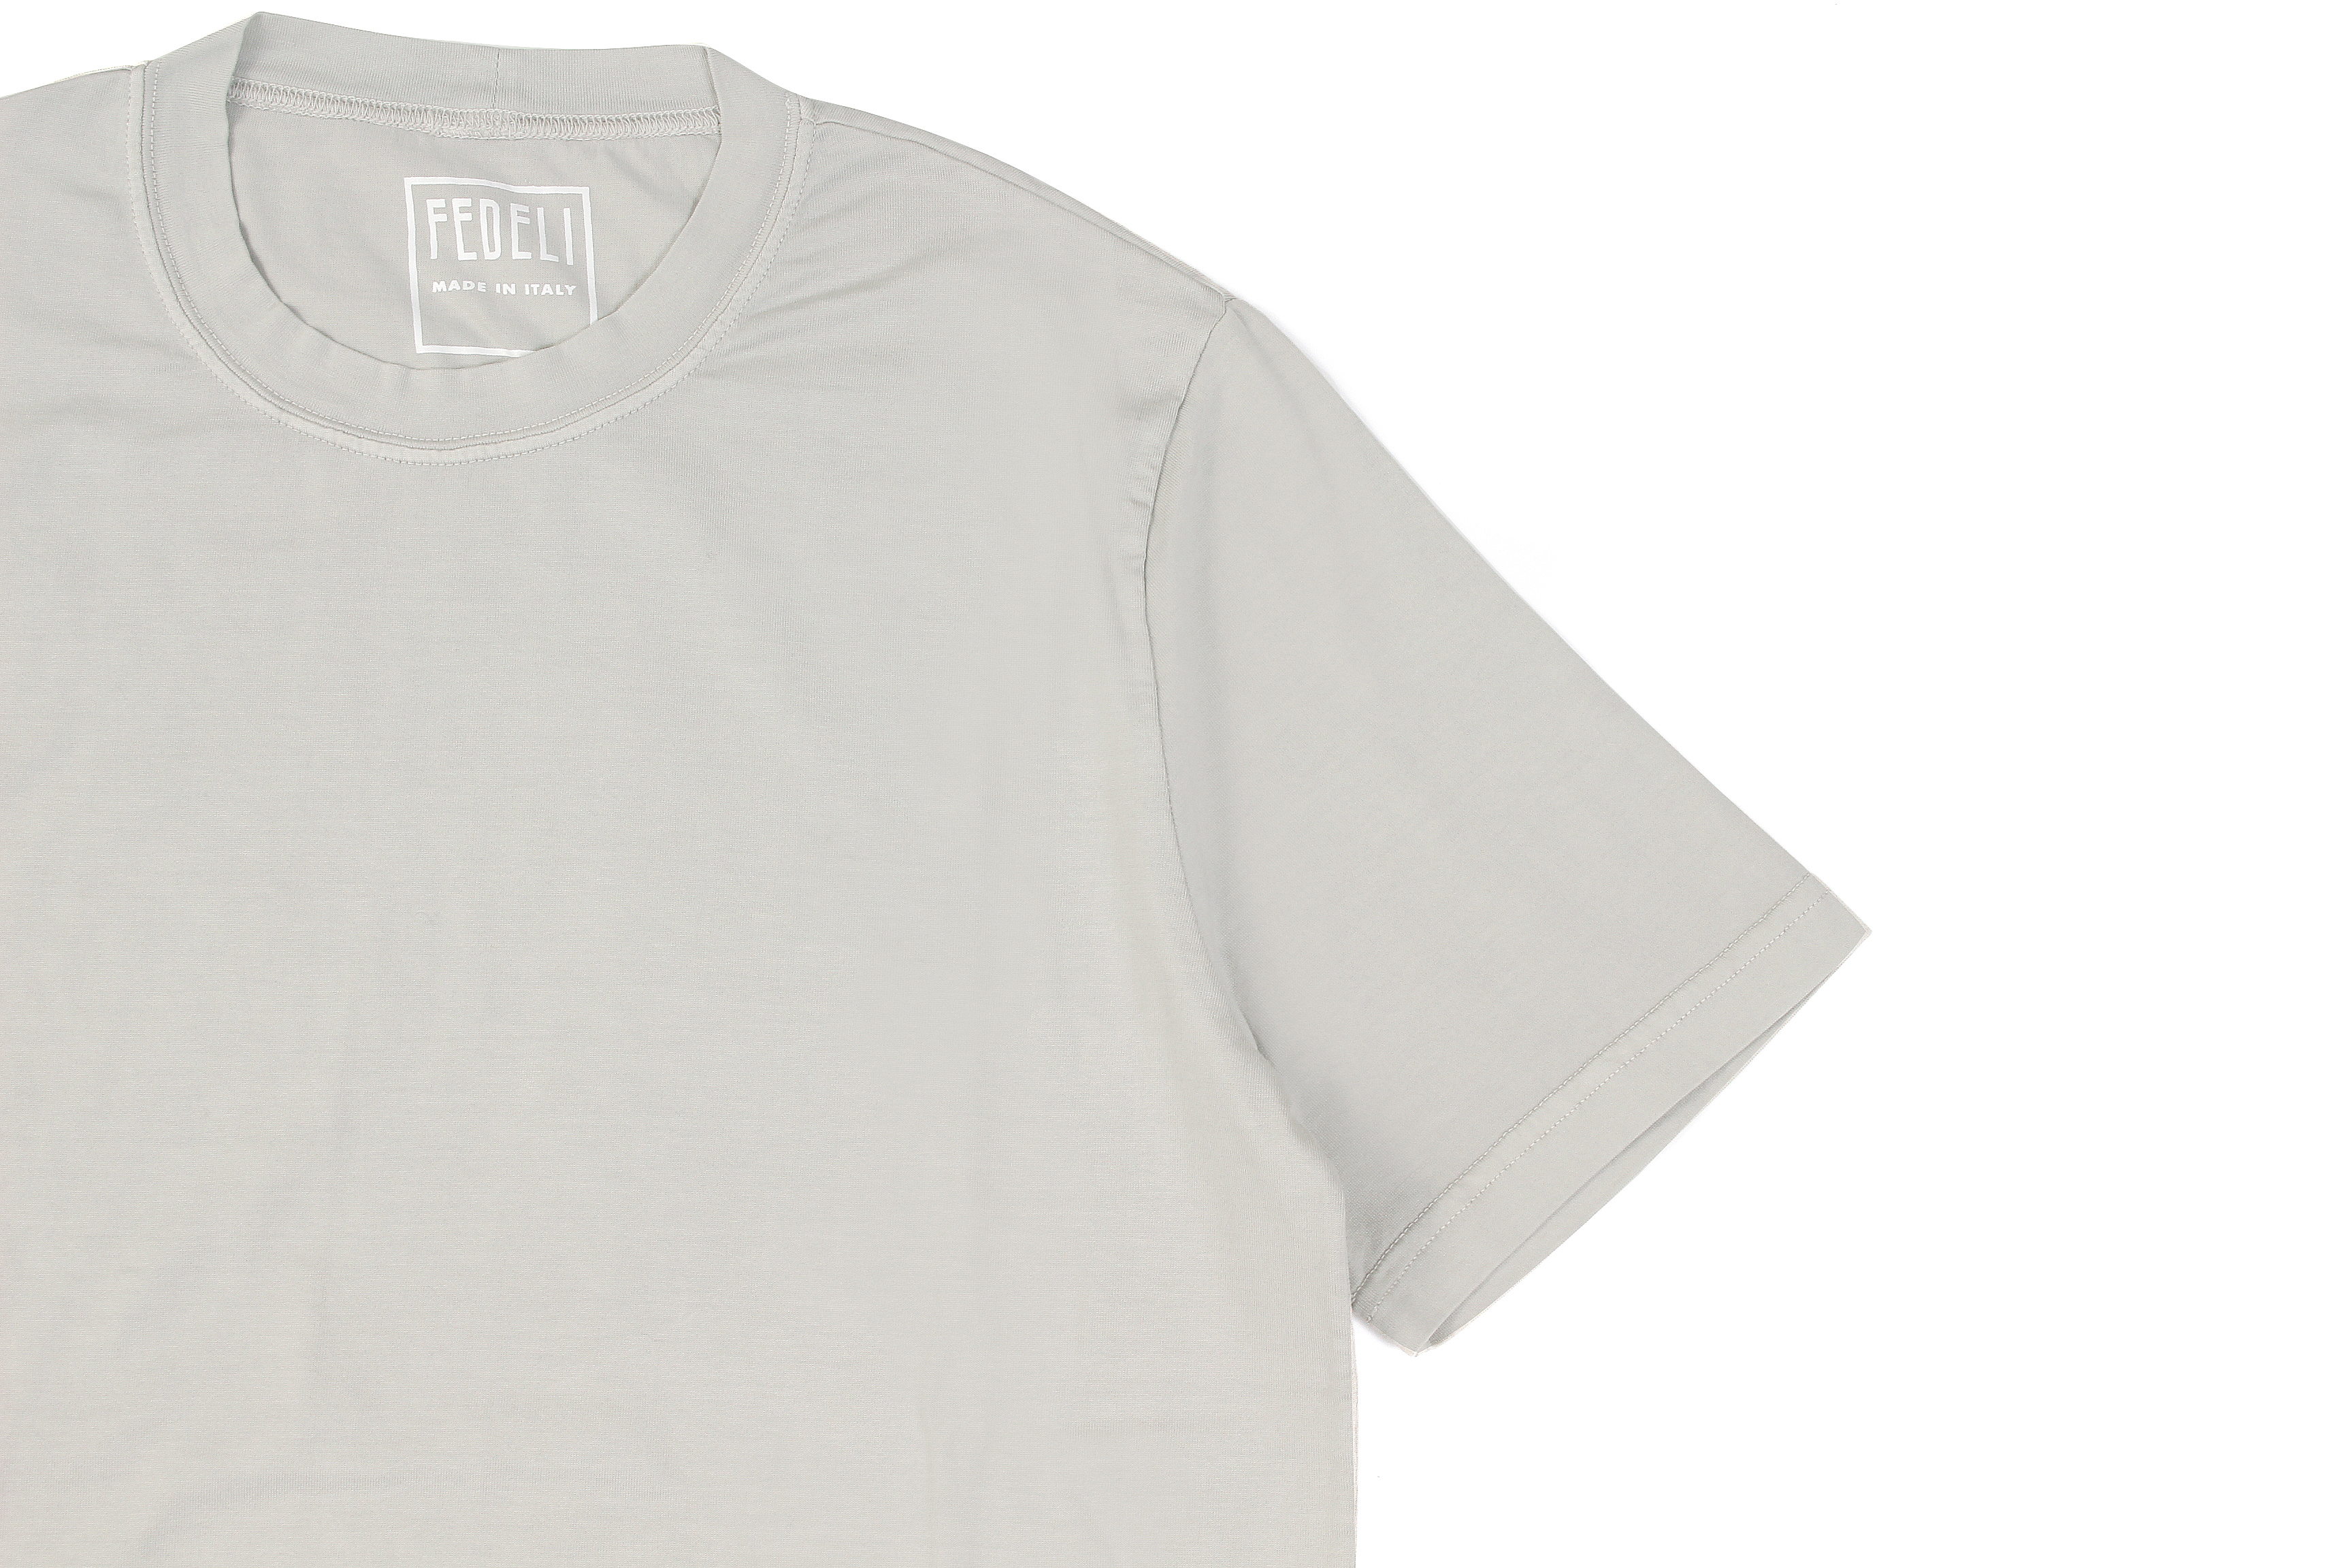 FEDELI(フェデーリ) Crew Neck T-shirt (クルーネック Tシャツ) ギザコットン Tシャツ GREGE (グレージュ・11) made in italy (イタリア製) 2020 春夏 【ご予約開始】愛知 名古屋 altoediritto アルトエデリット TEE